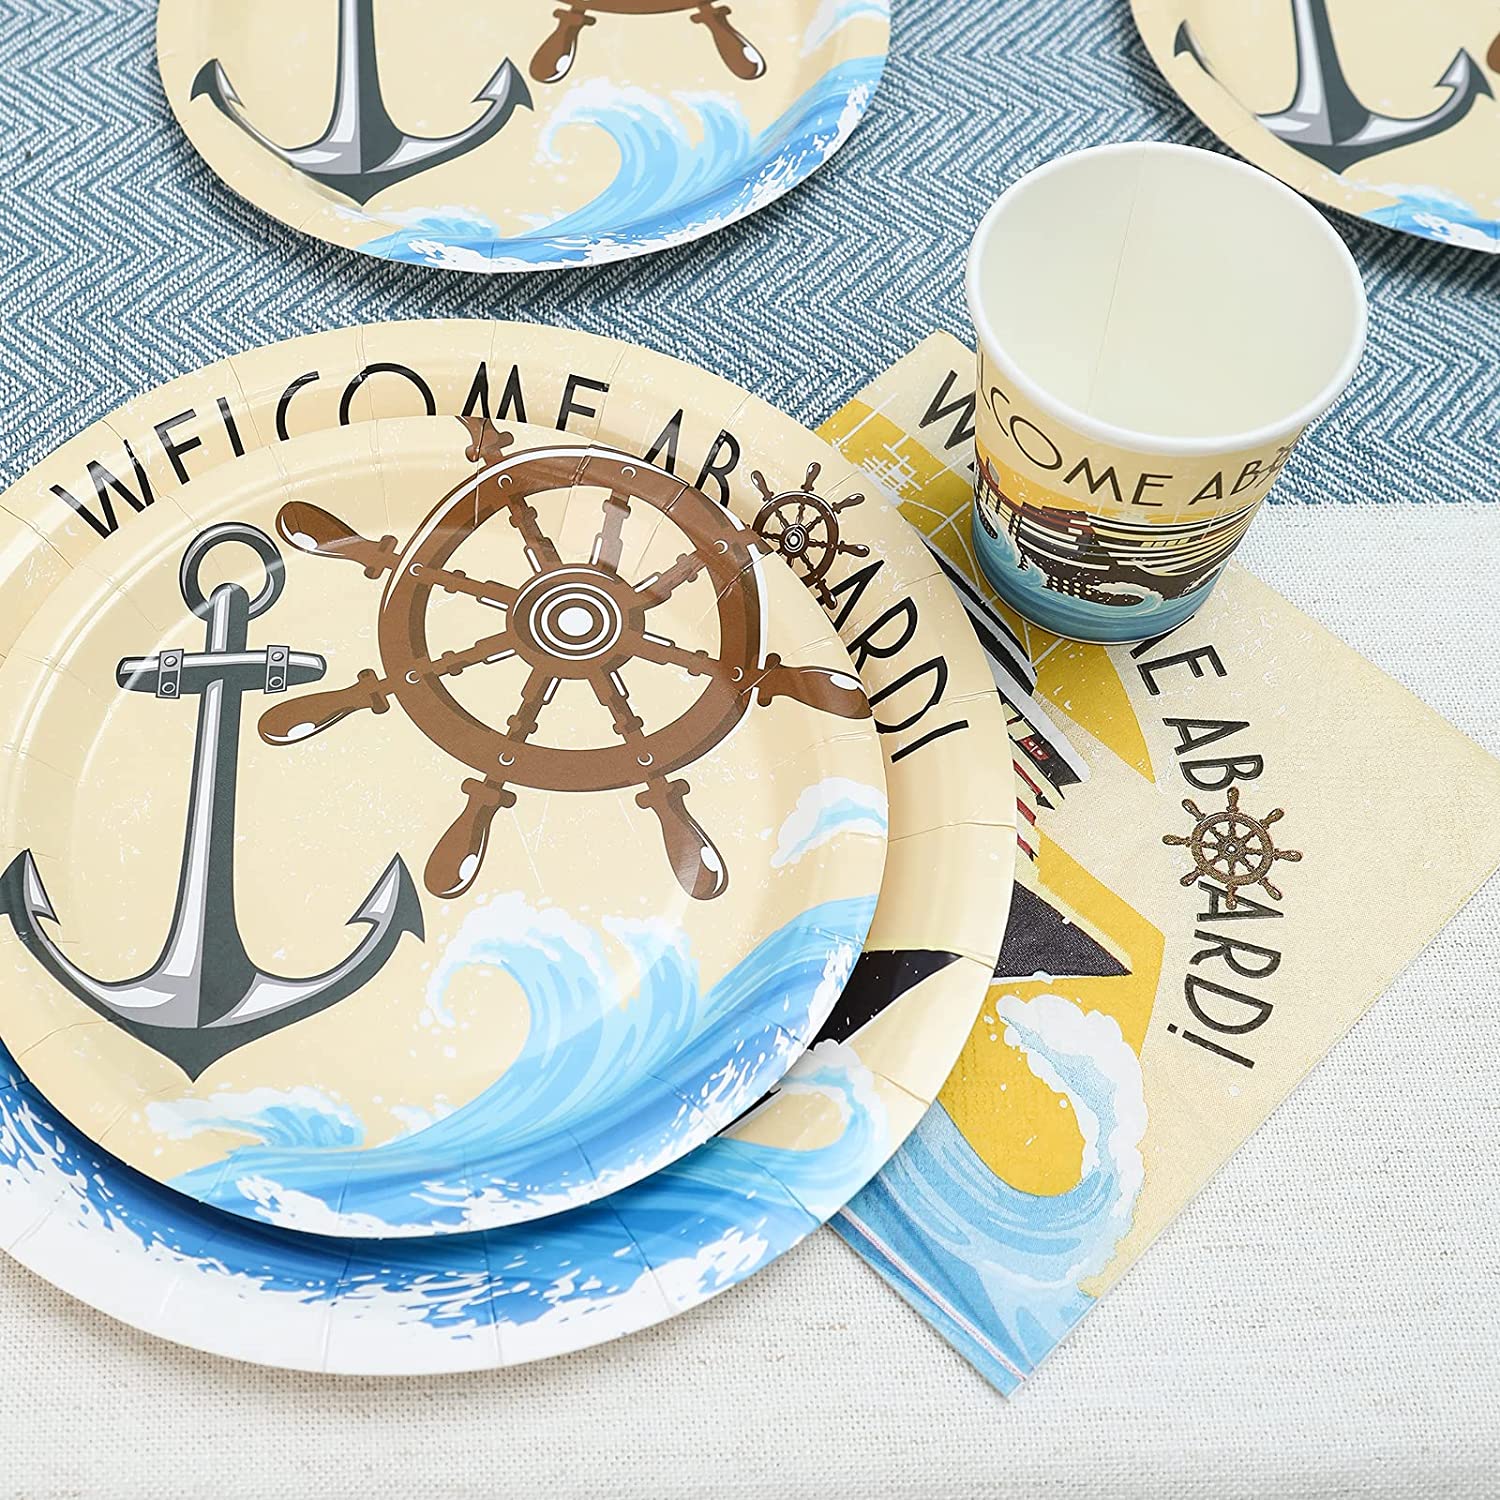 Titanic Birthday Plates, Cups and Napkins (Serves 24)